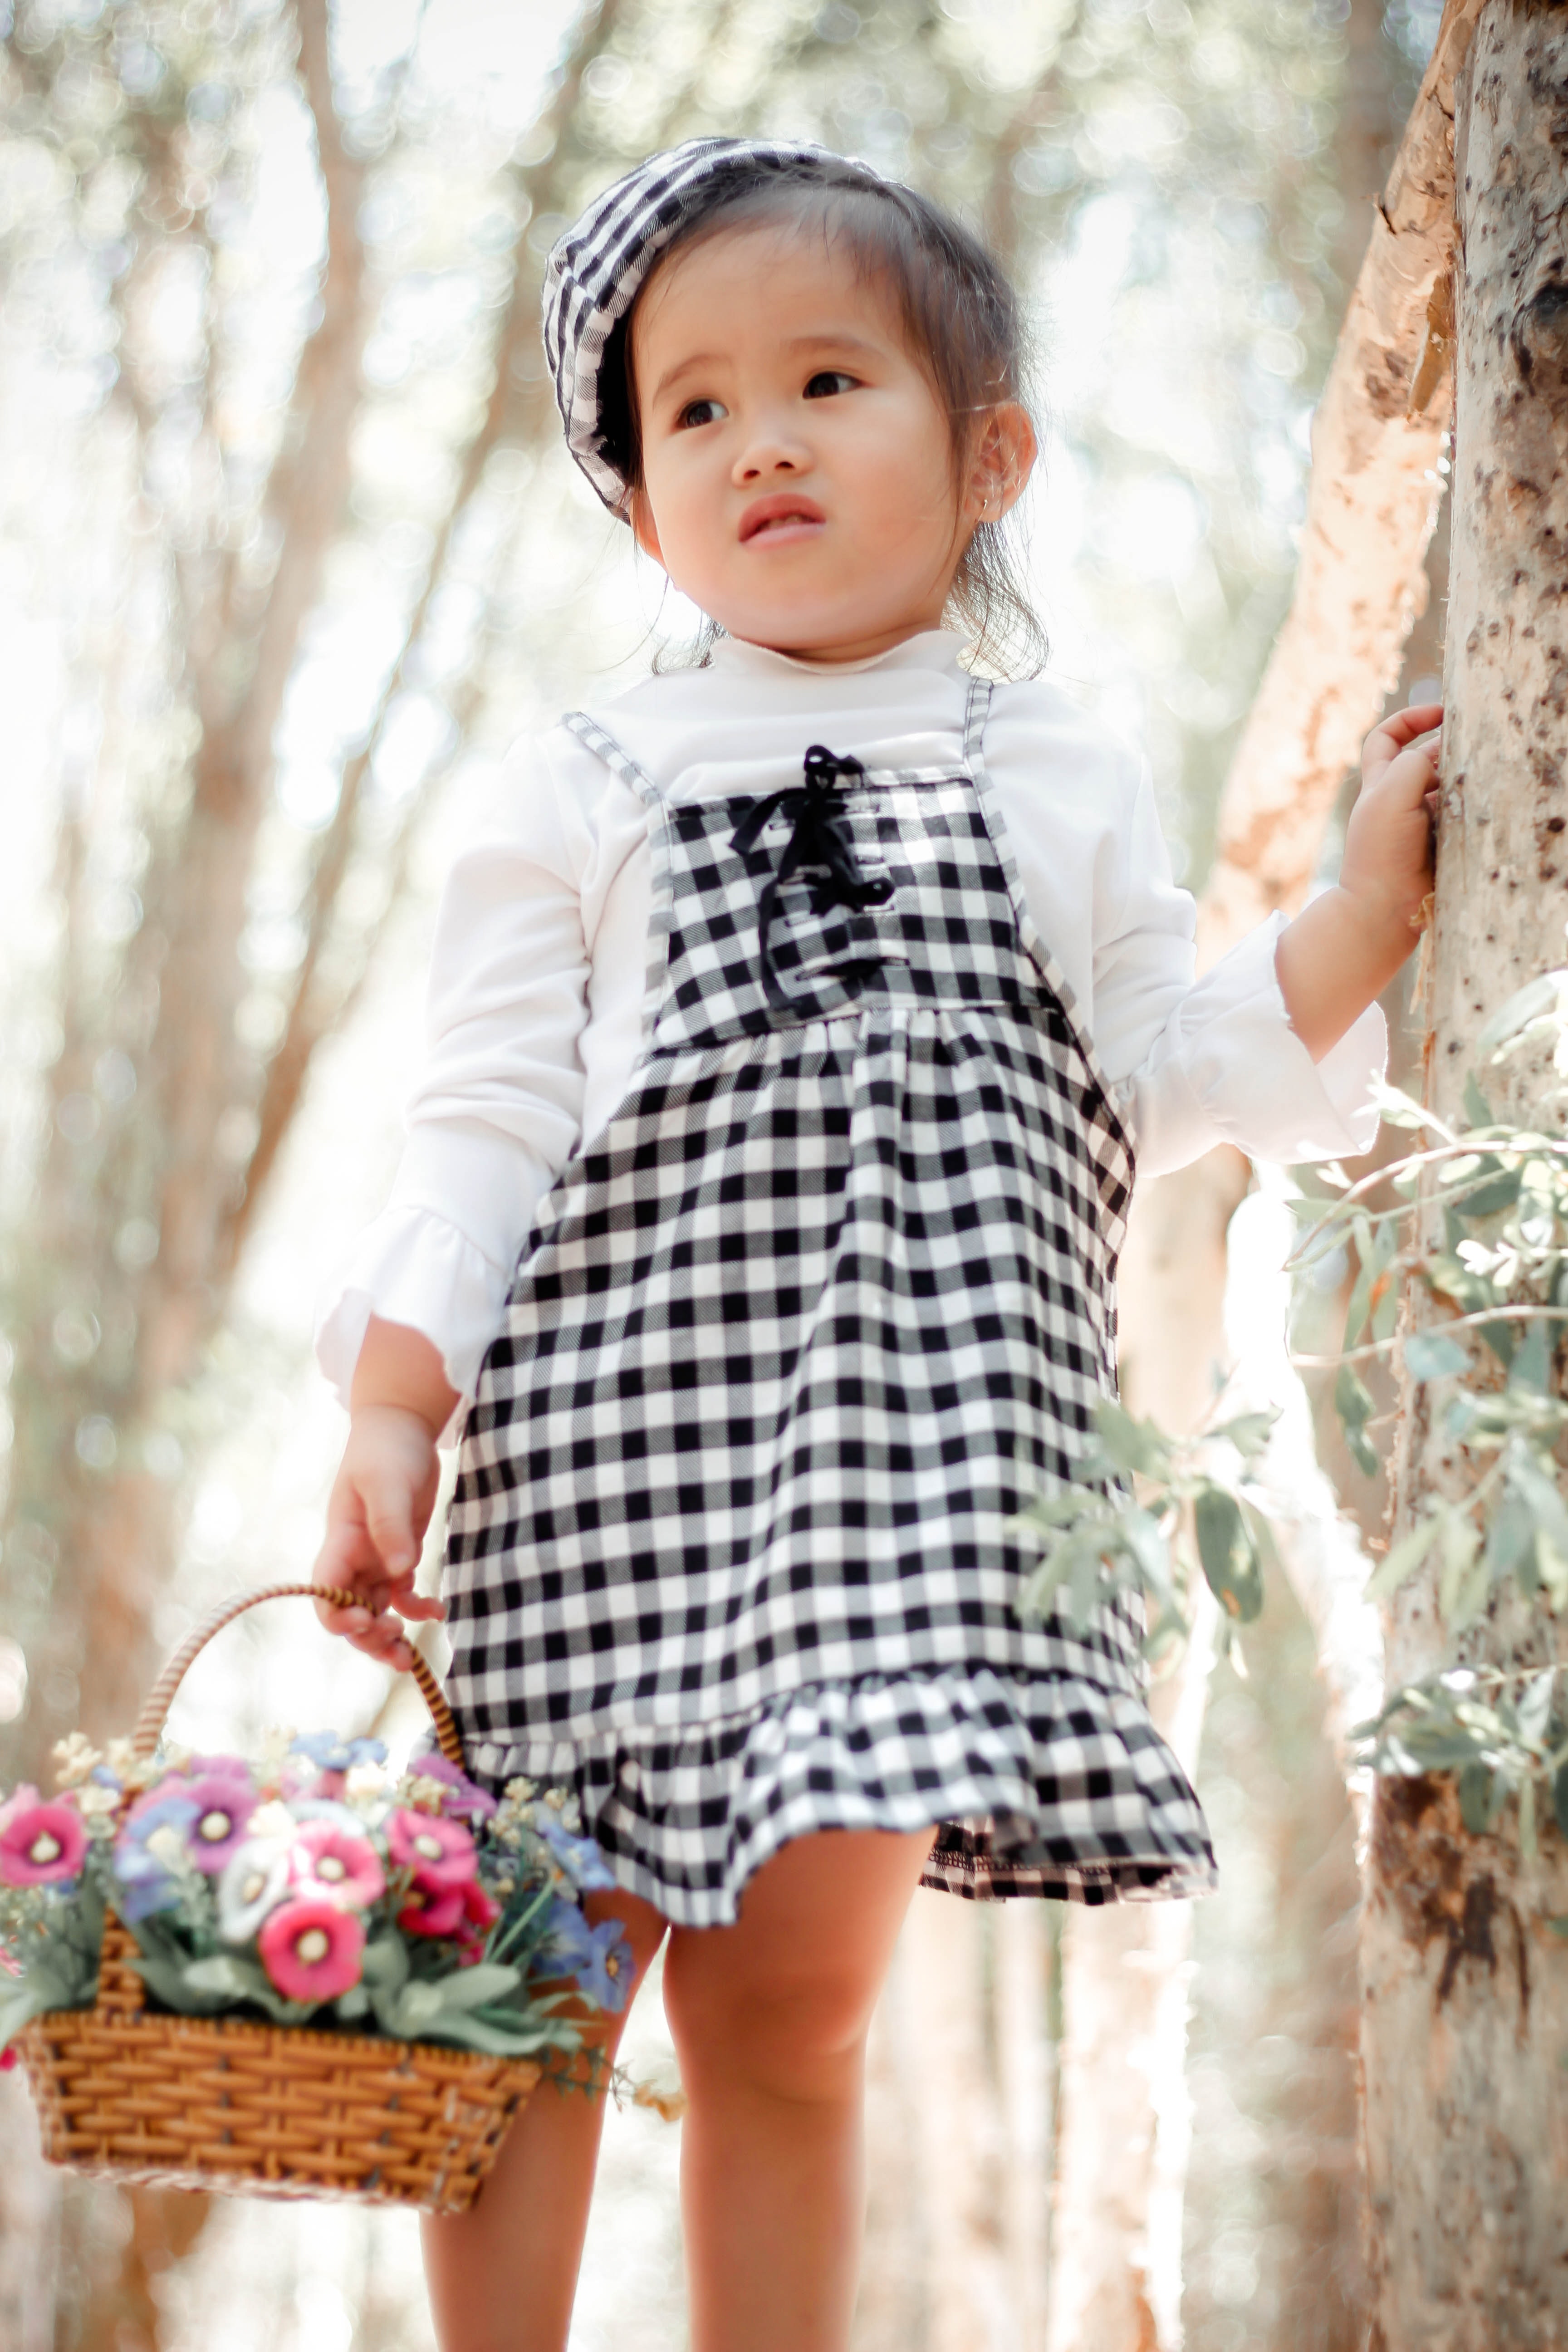 Girl in White Long-sleeved Dress Holding Basket of Flowers, Baby, Innocence, Toddler, Pretty, HQ Photo